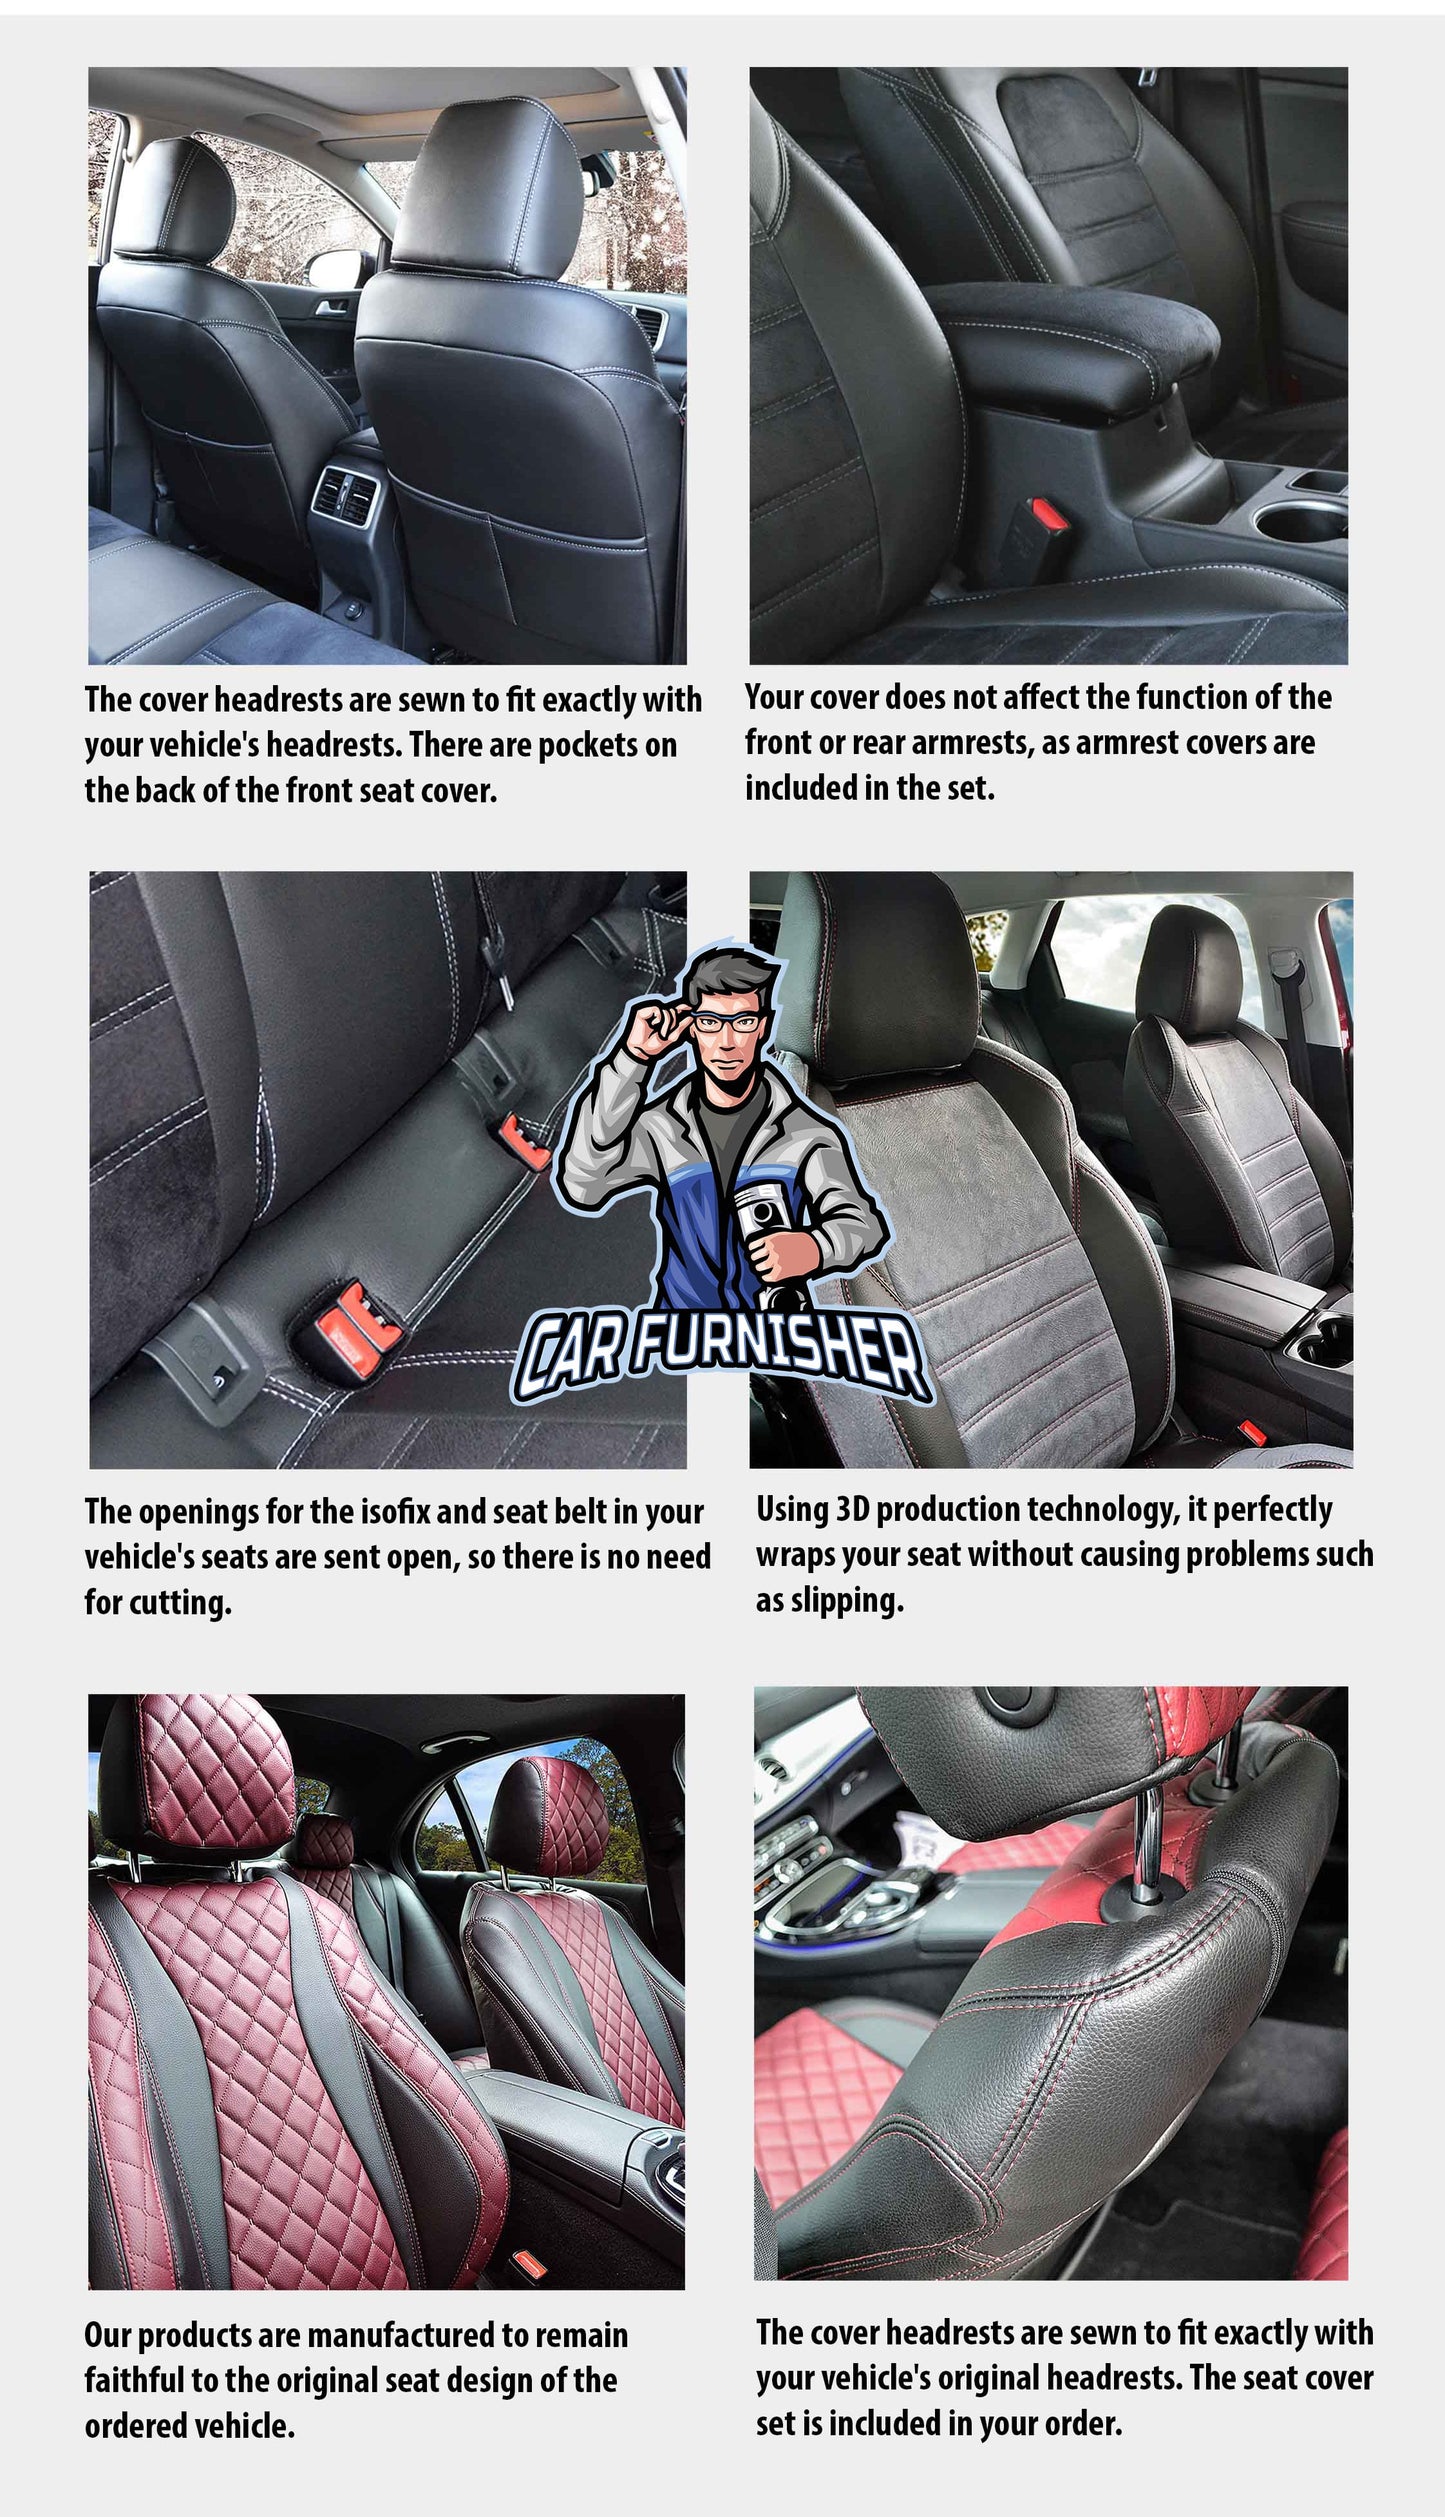 Suzuki Baleno Seat Covers Madrid Leather Design Red Leather